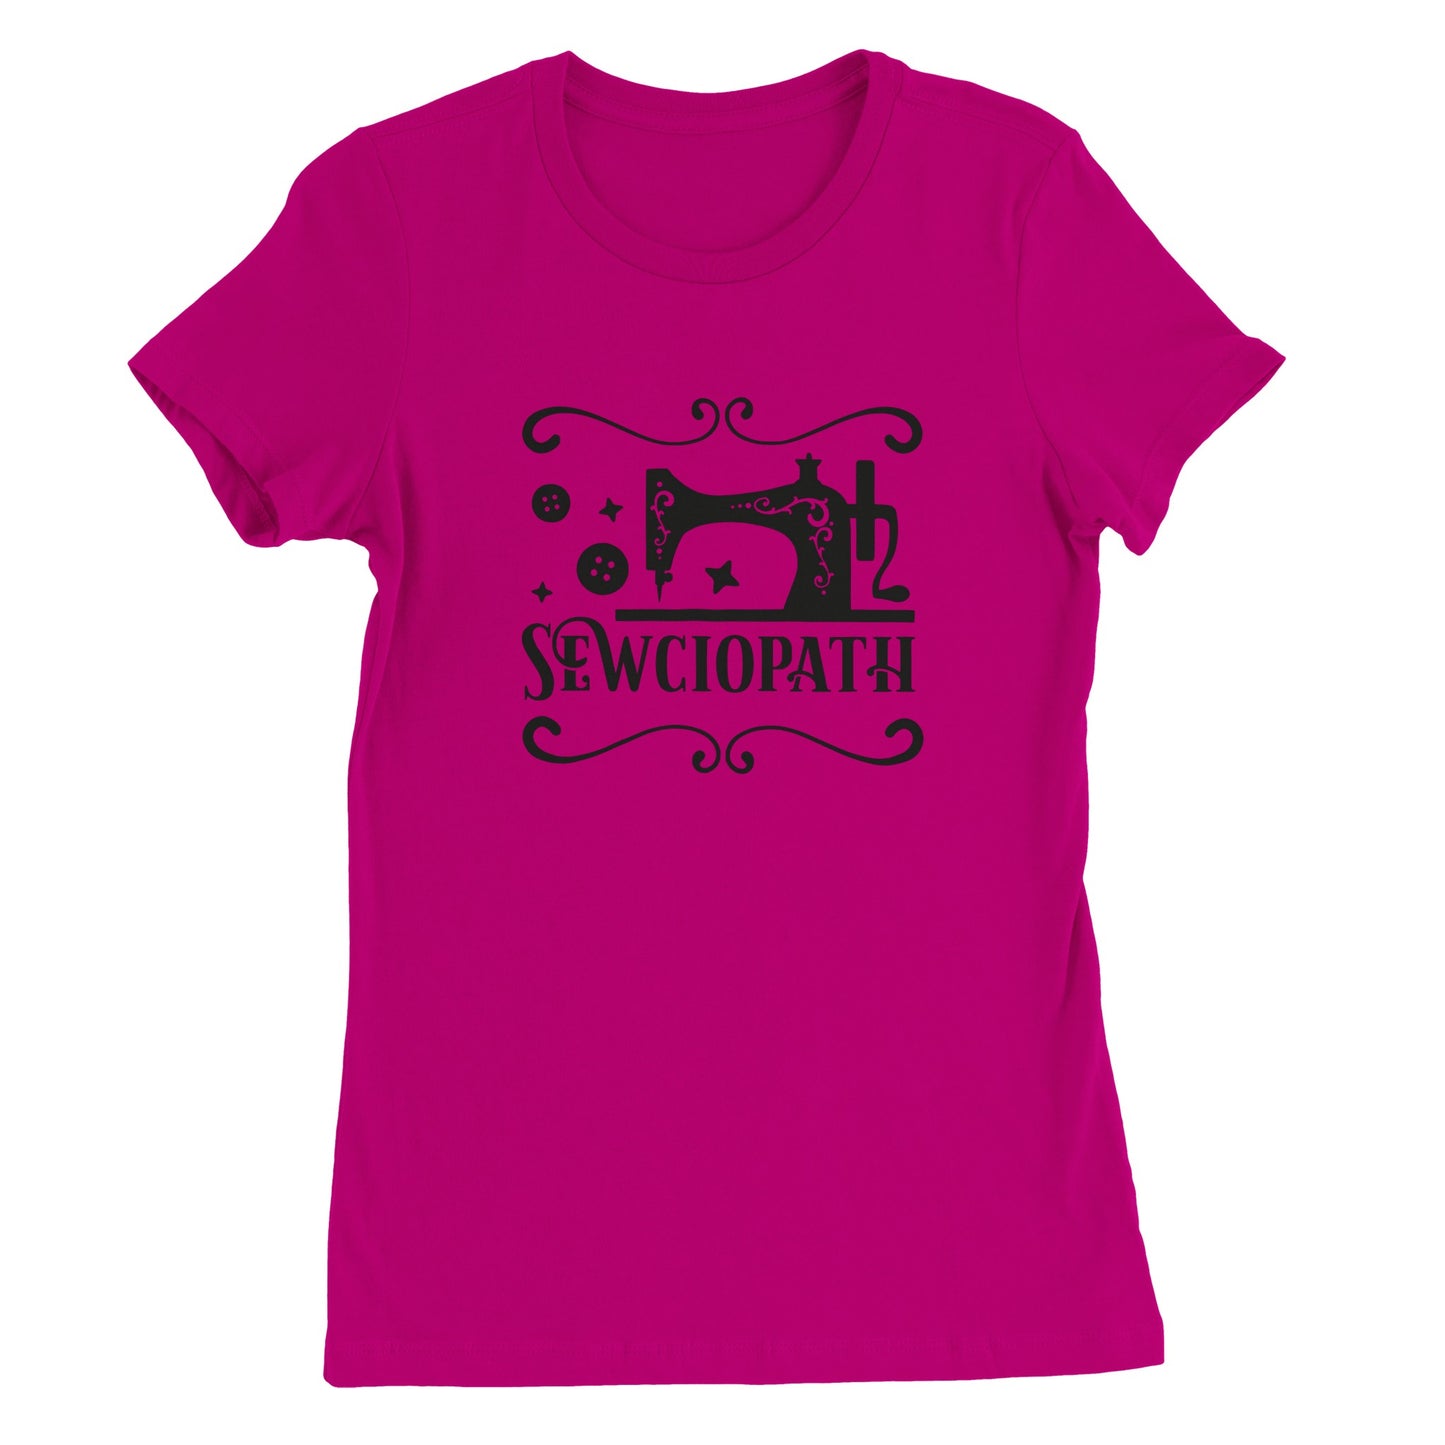 Sewciopath - Premium Women's Crewneck T-shirt